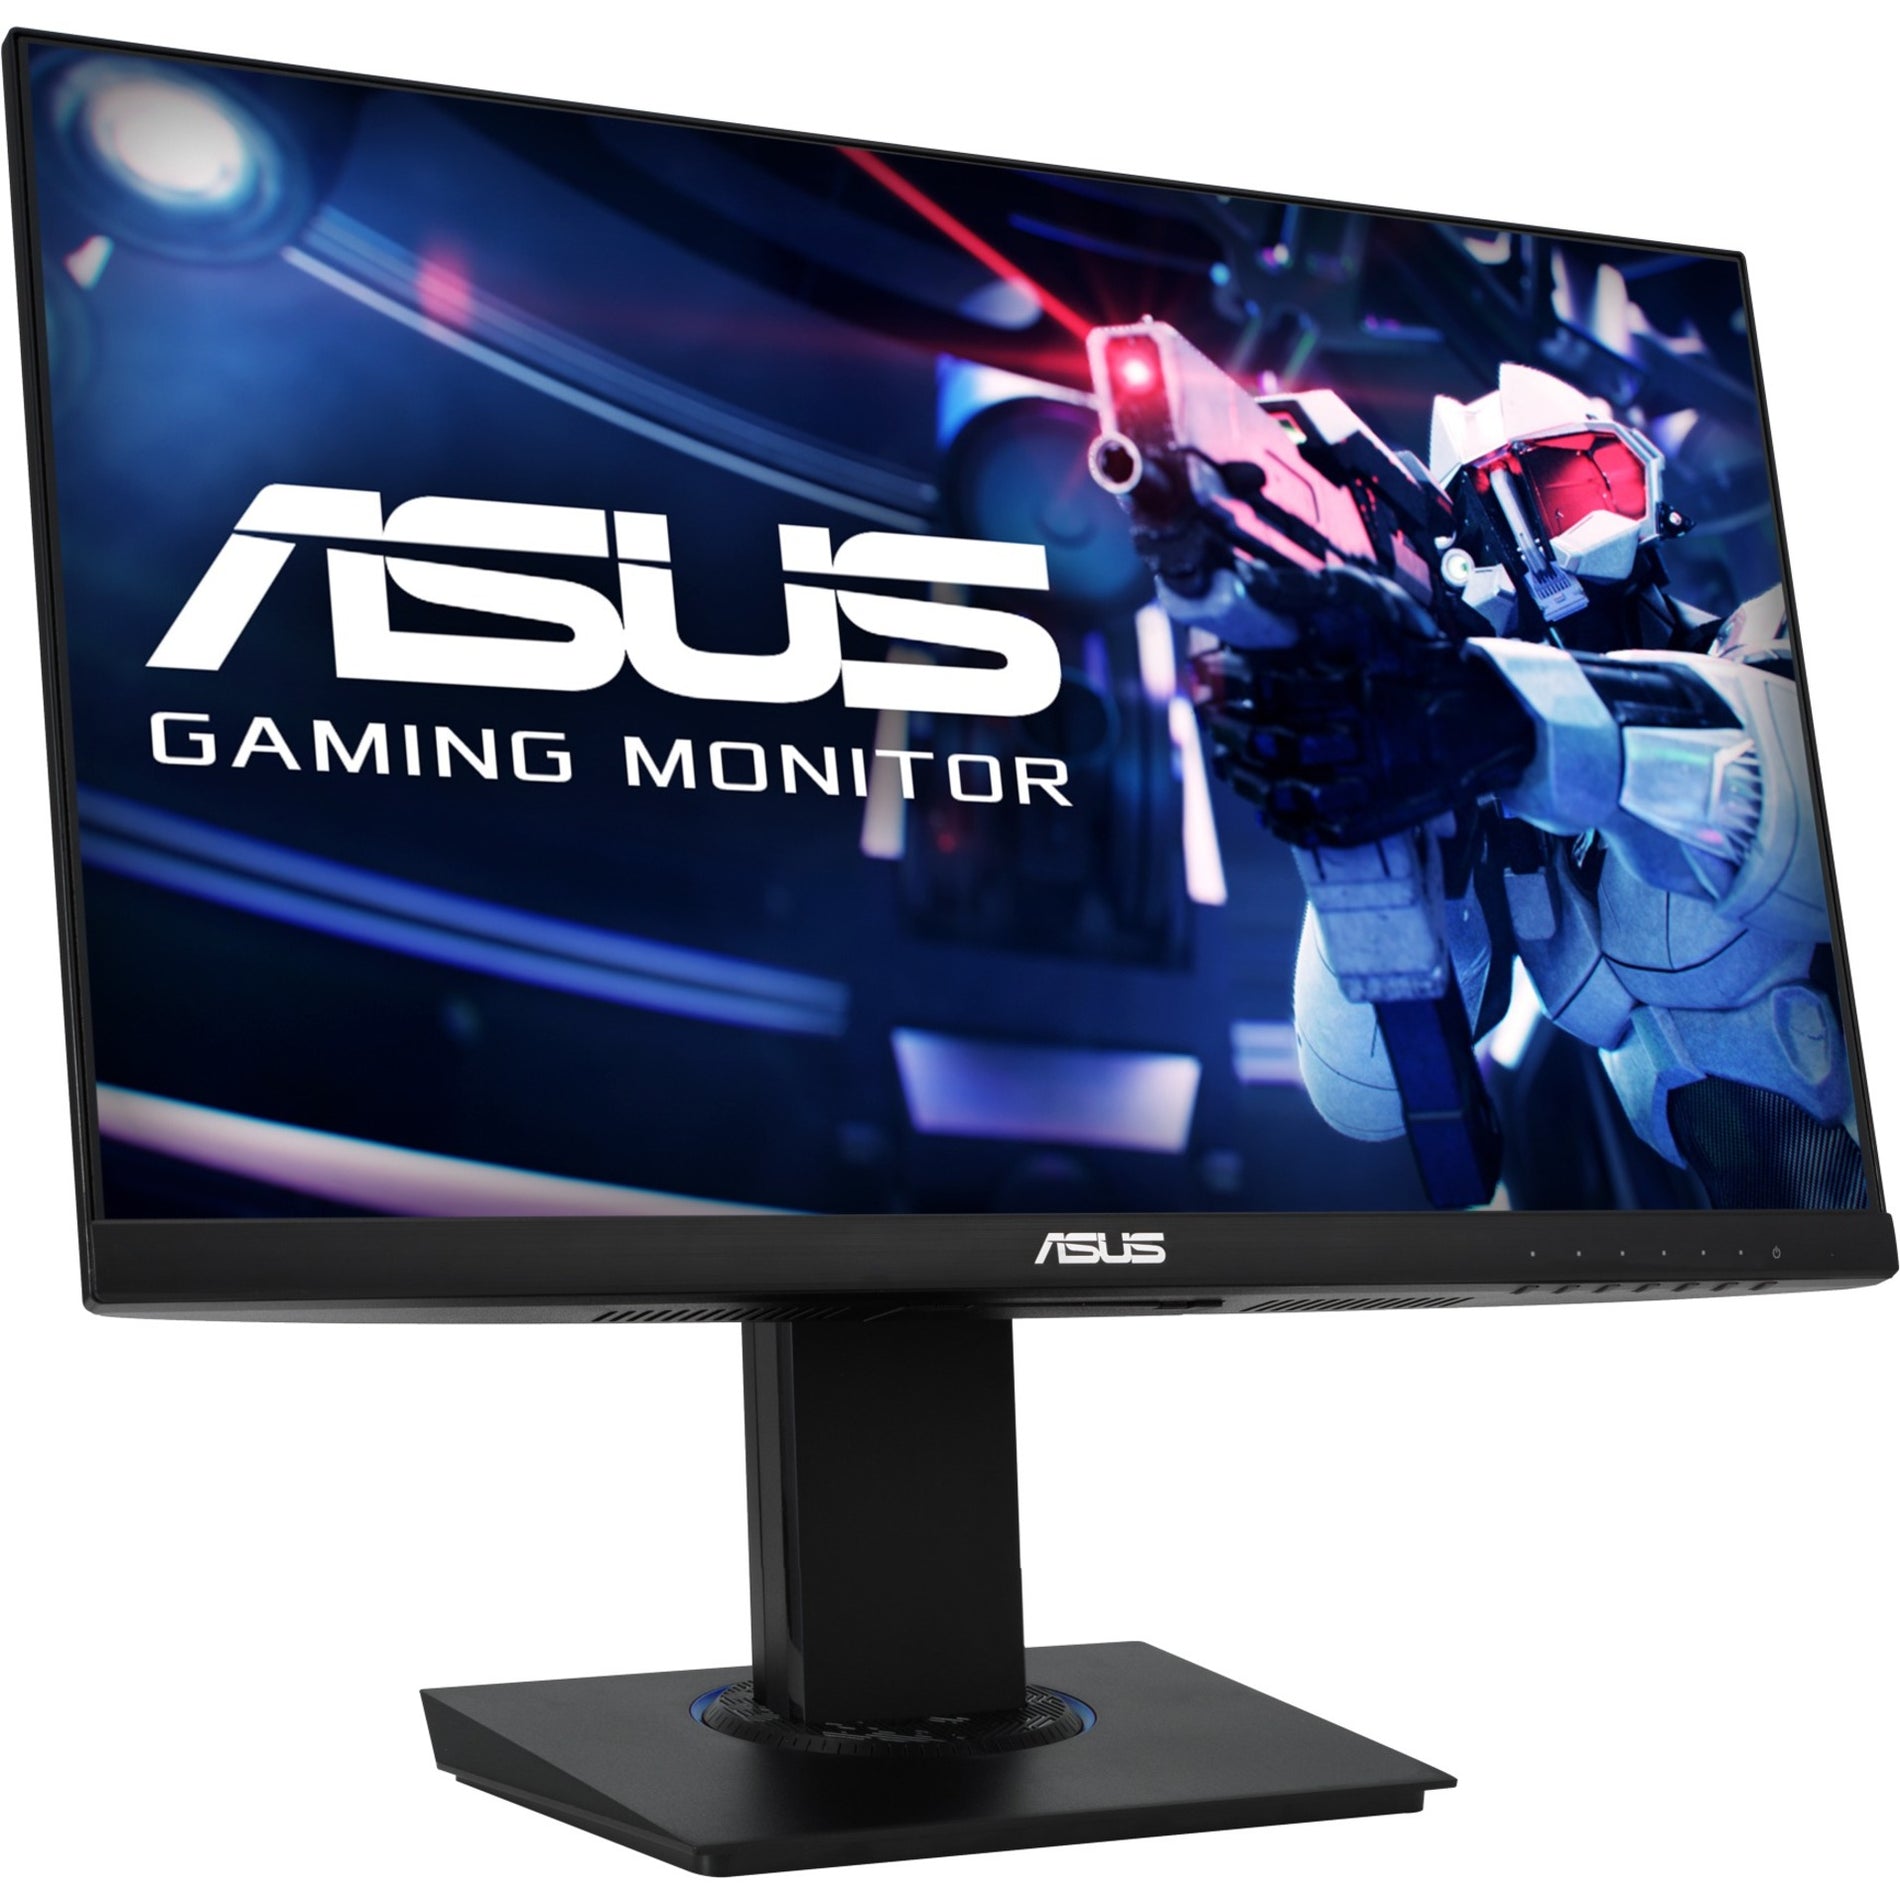 Asus Gaming LCD Monitor VG246H, 23.8" Full HD, 1ms Response Time, FreeSync